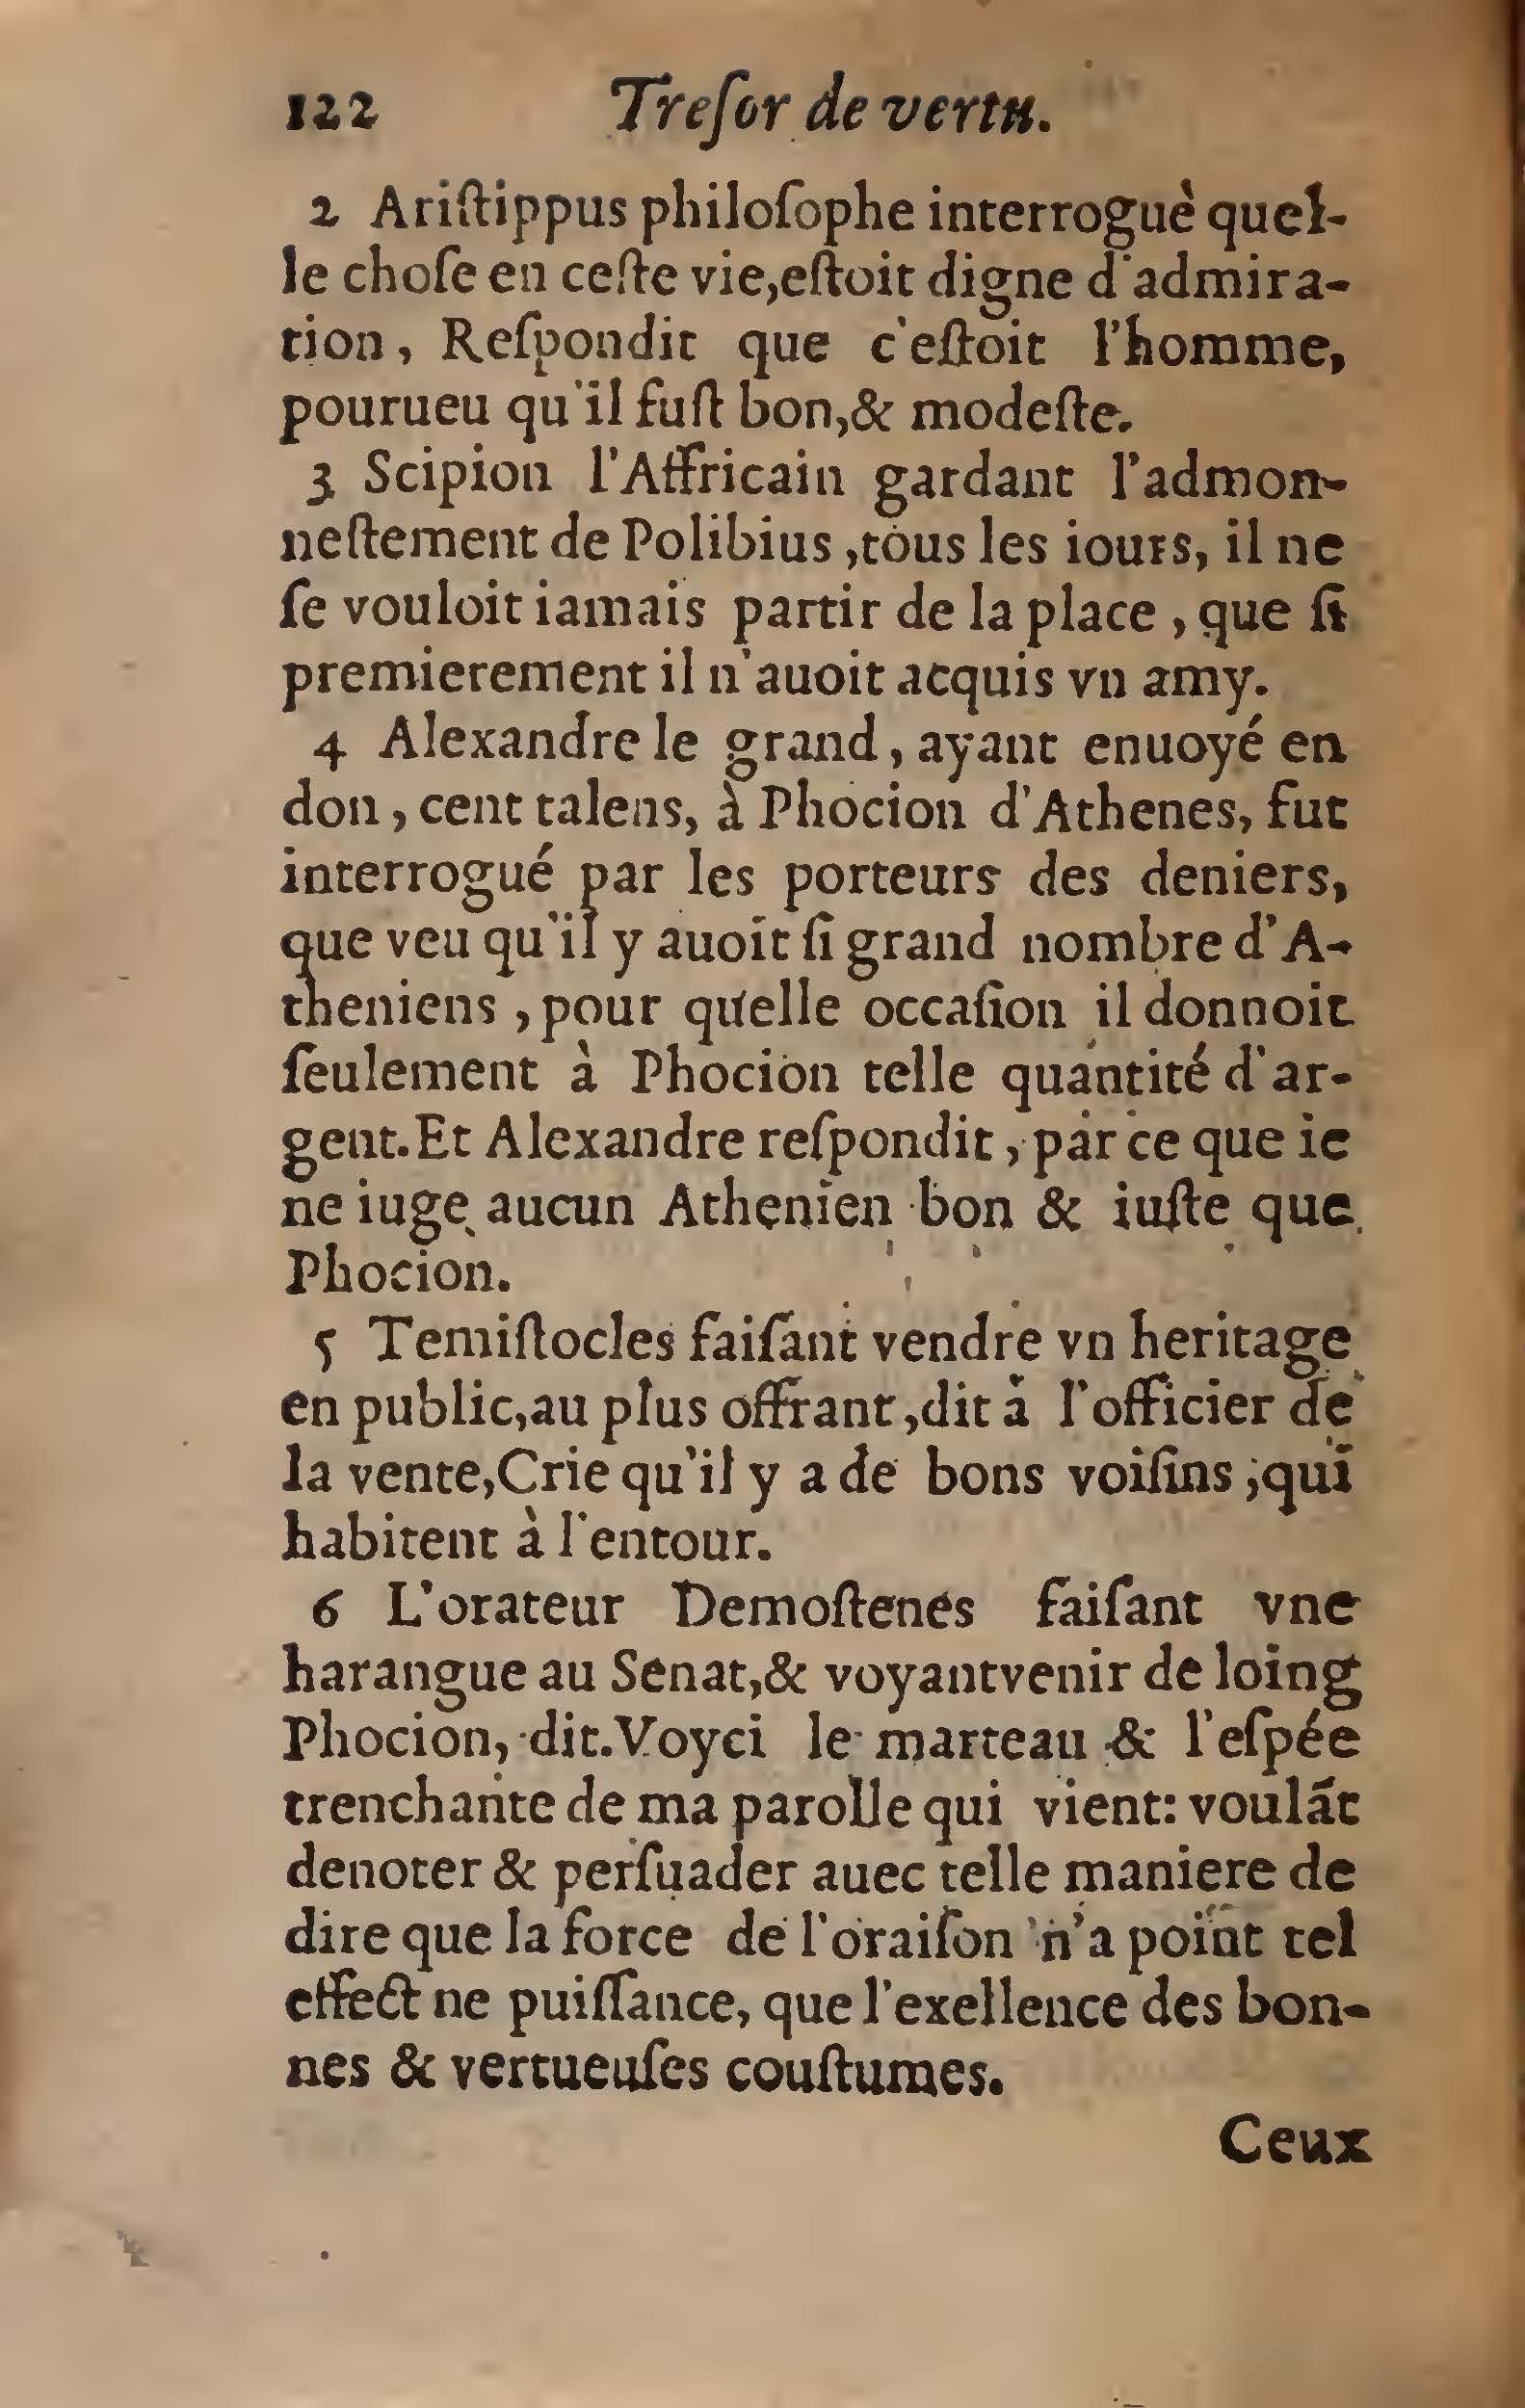 1558 Nicolas Perrineau et Jean Temporal - Trésor de vertu_BNC Rome_Page_123.jpg